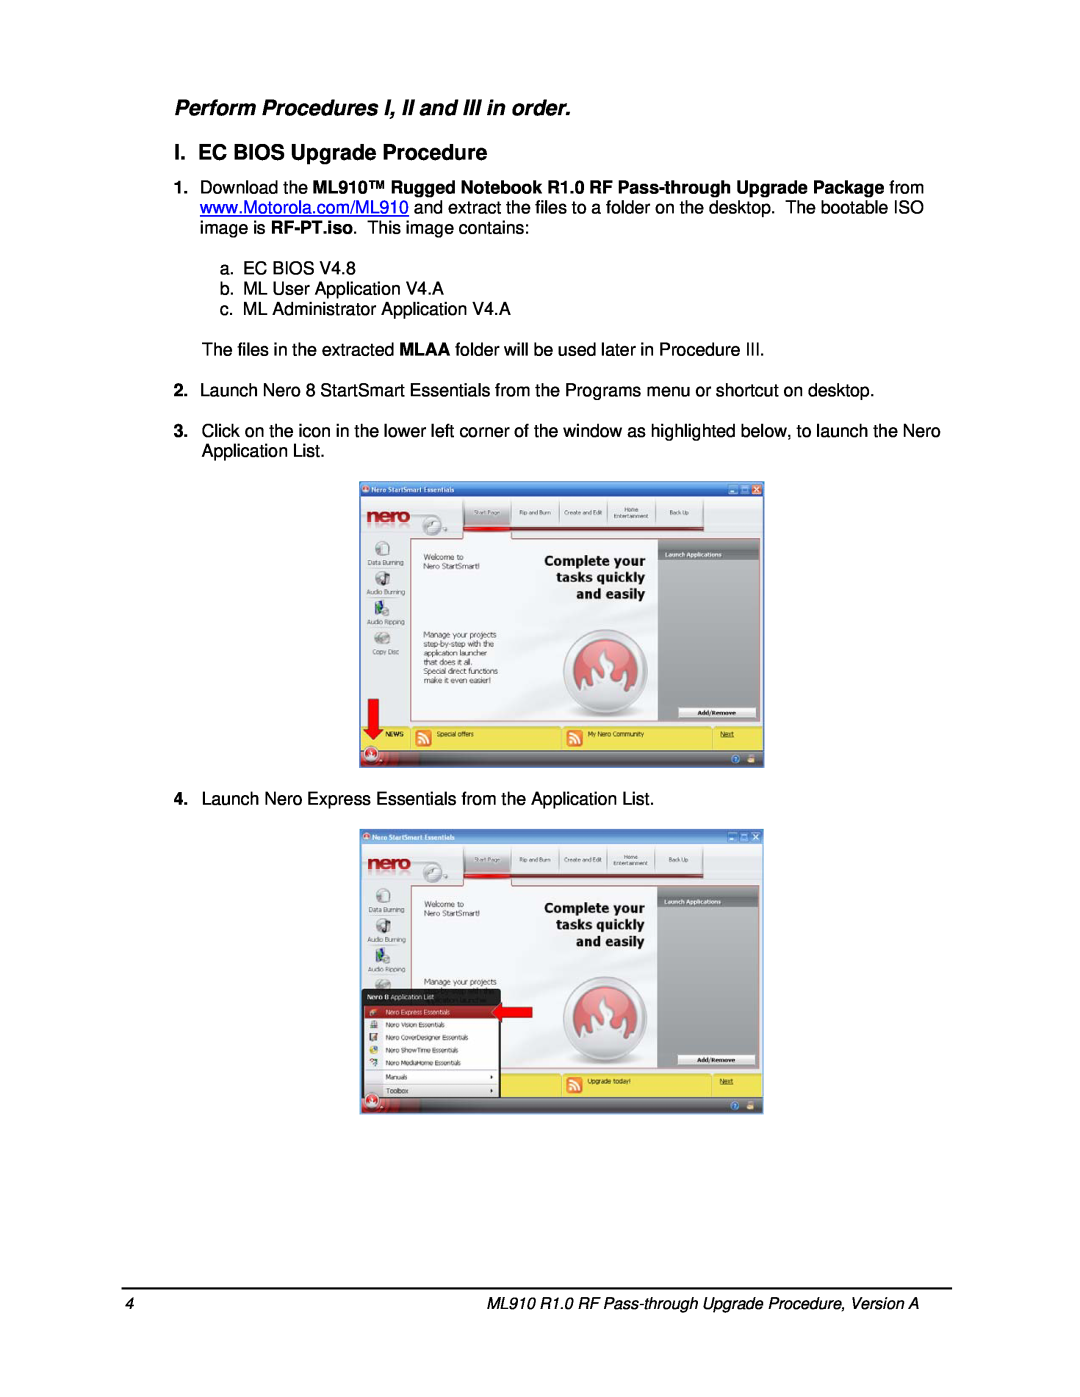 Motorola ML910TM manual I. EC BIOS Upgrade Procedure, Perform Procedures I, II and III in order 